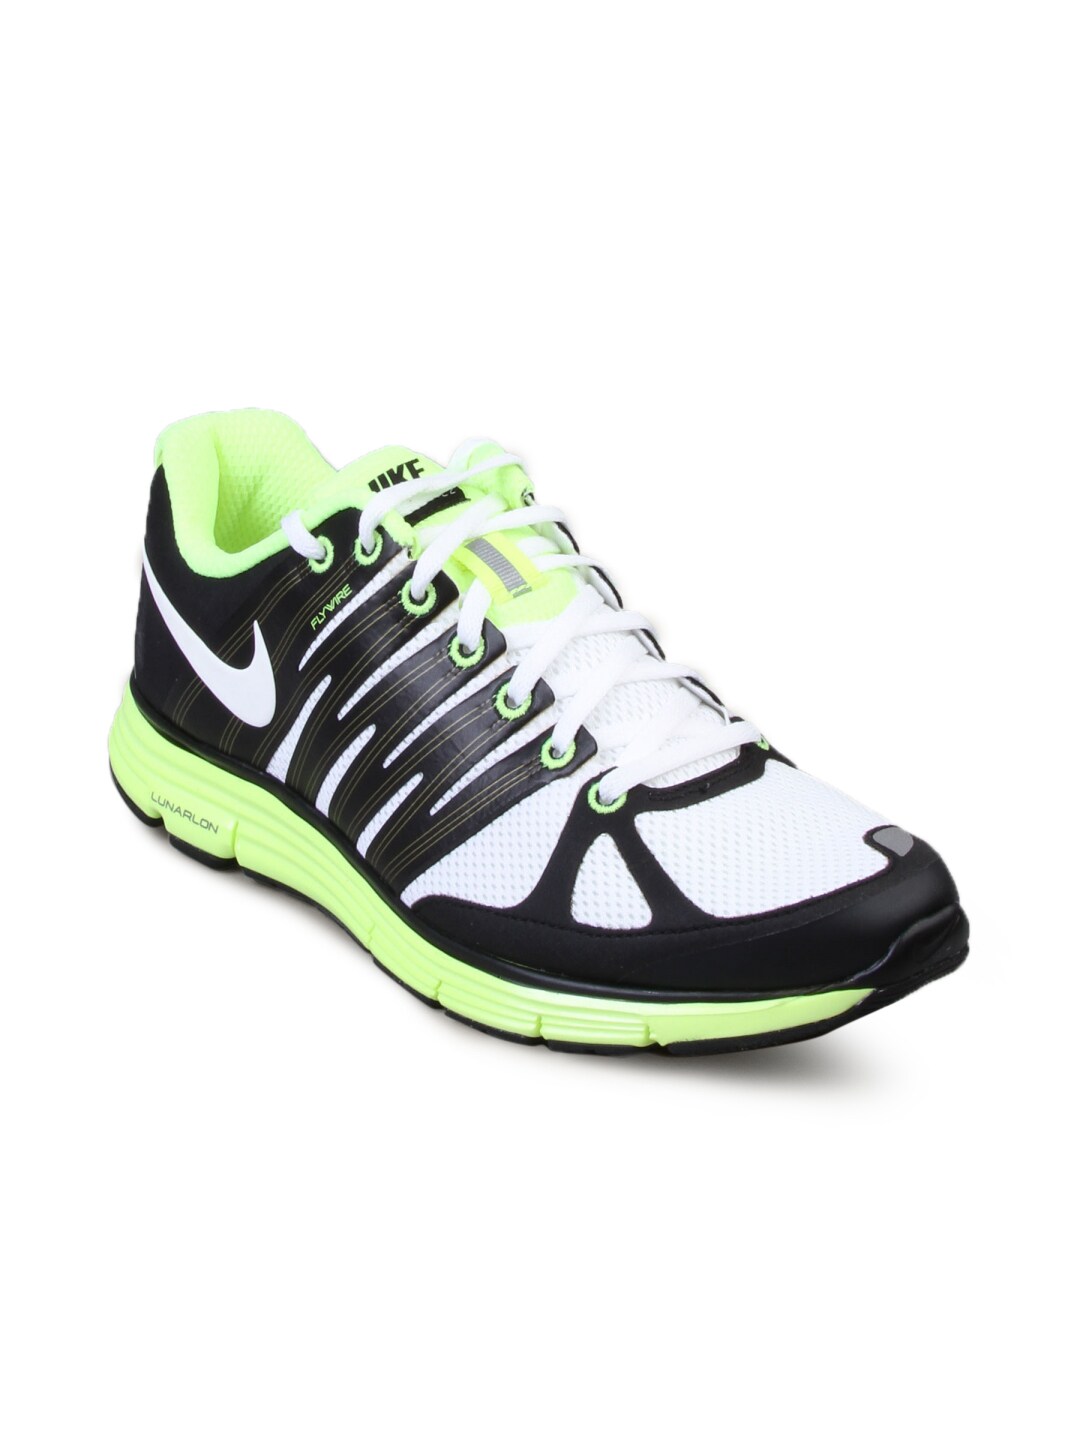 Nike Men's Lunarelite Black Green Shoe